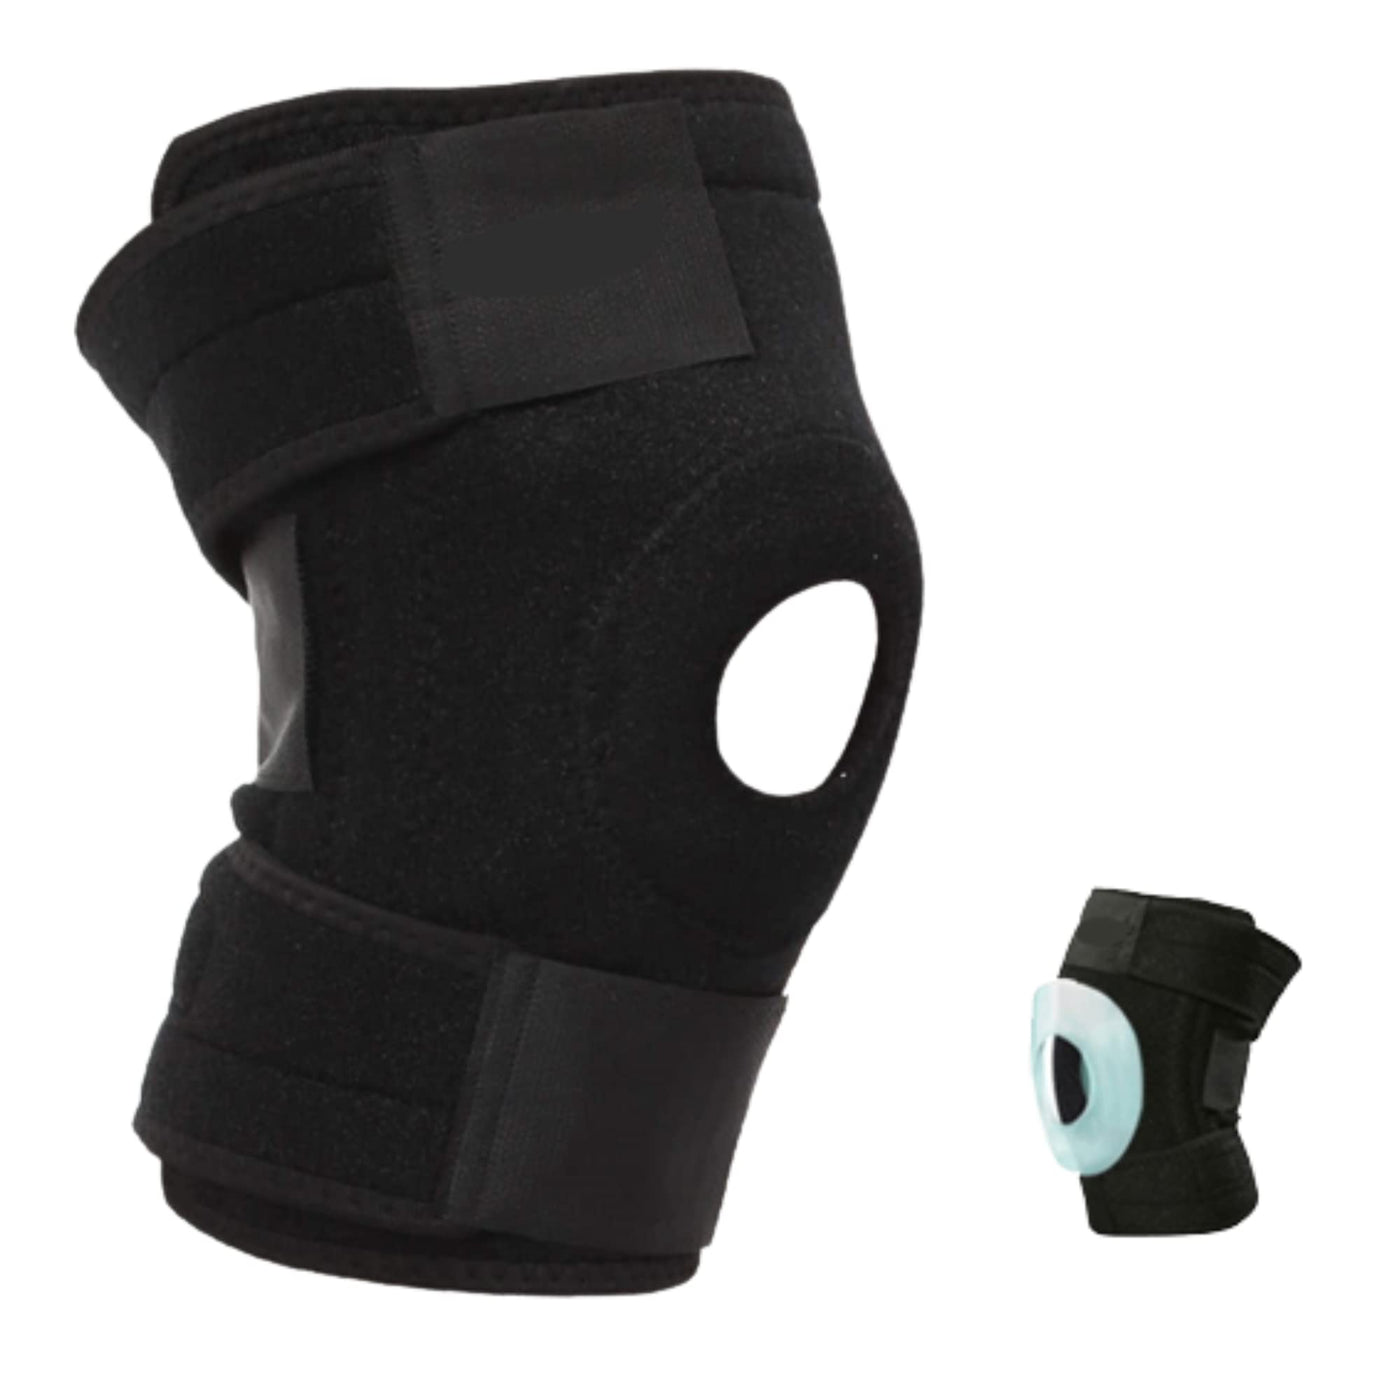 Adjustable Knee Support Brace for Men & Women - Open Patella